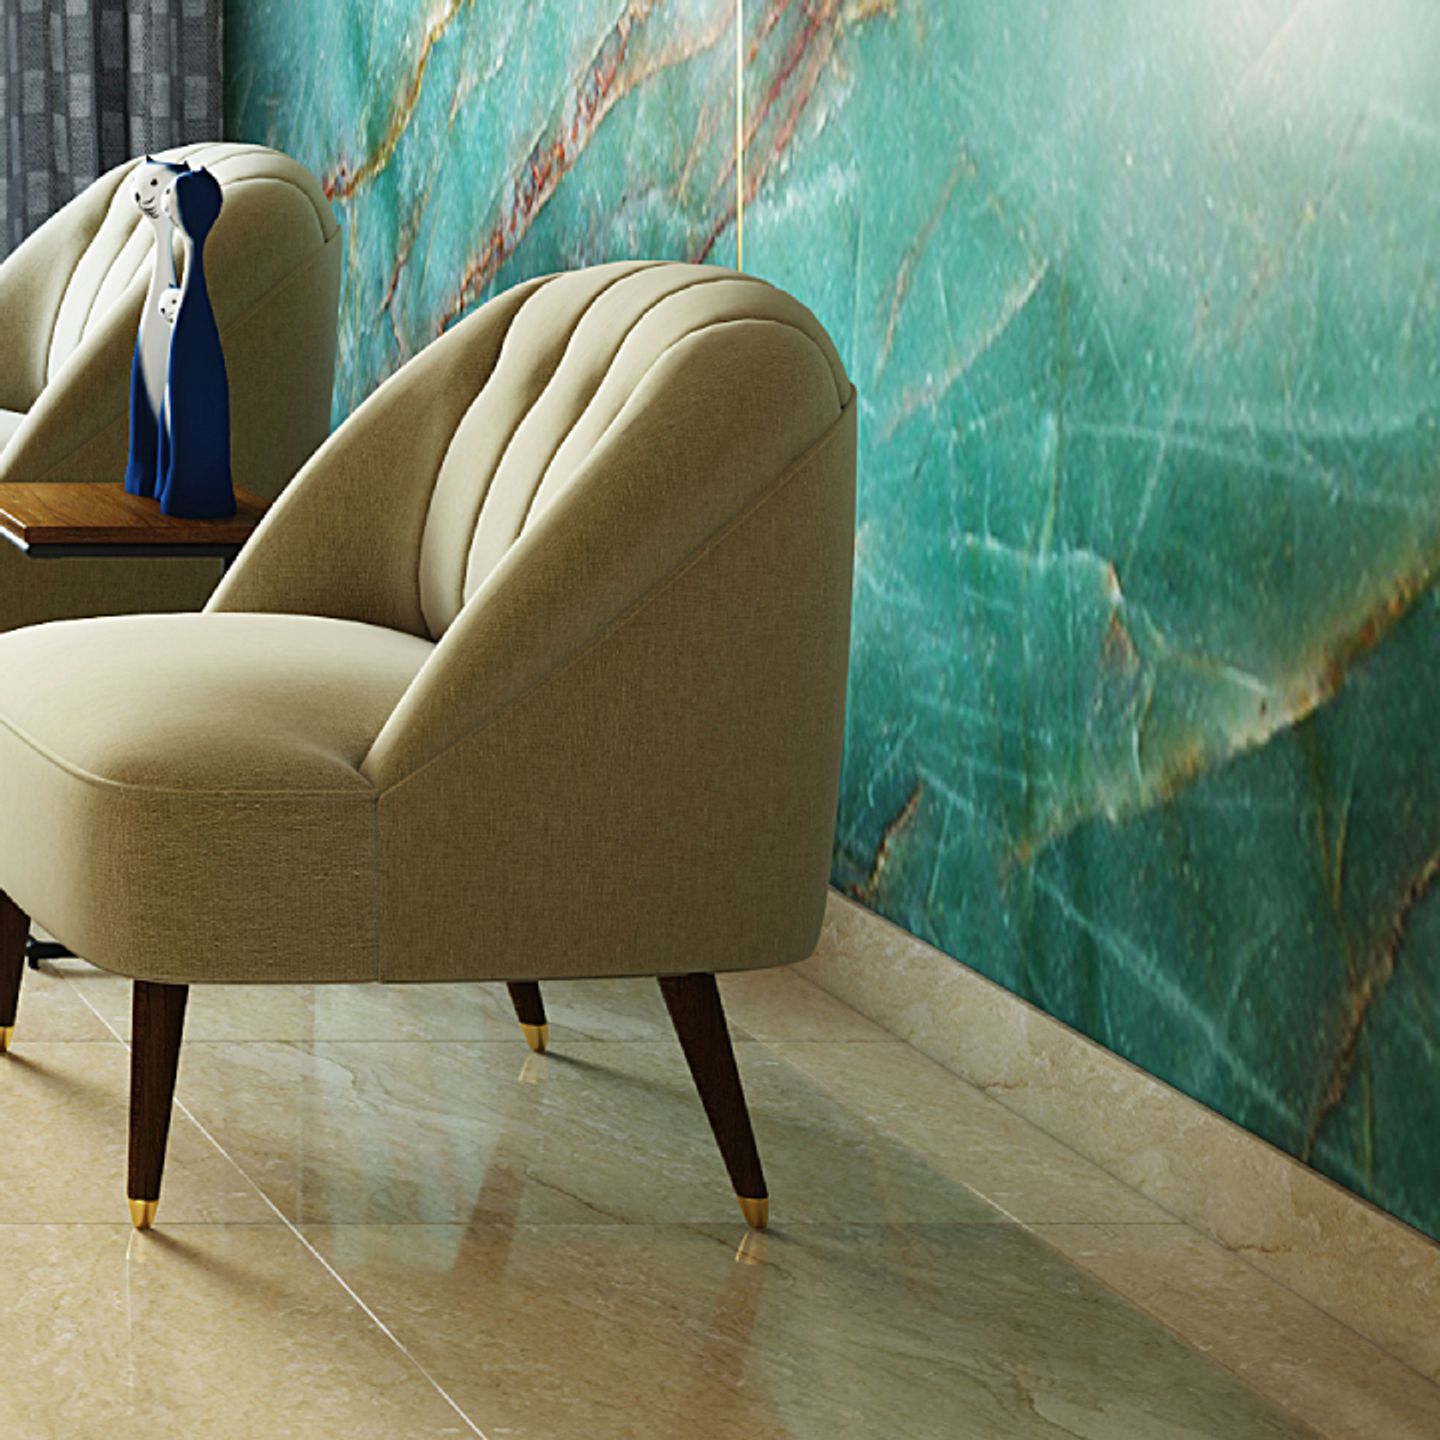 Beige Marble Floor Tile Design For Living Rooms - Livspace